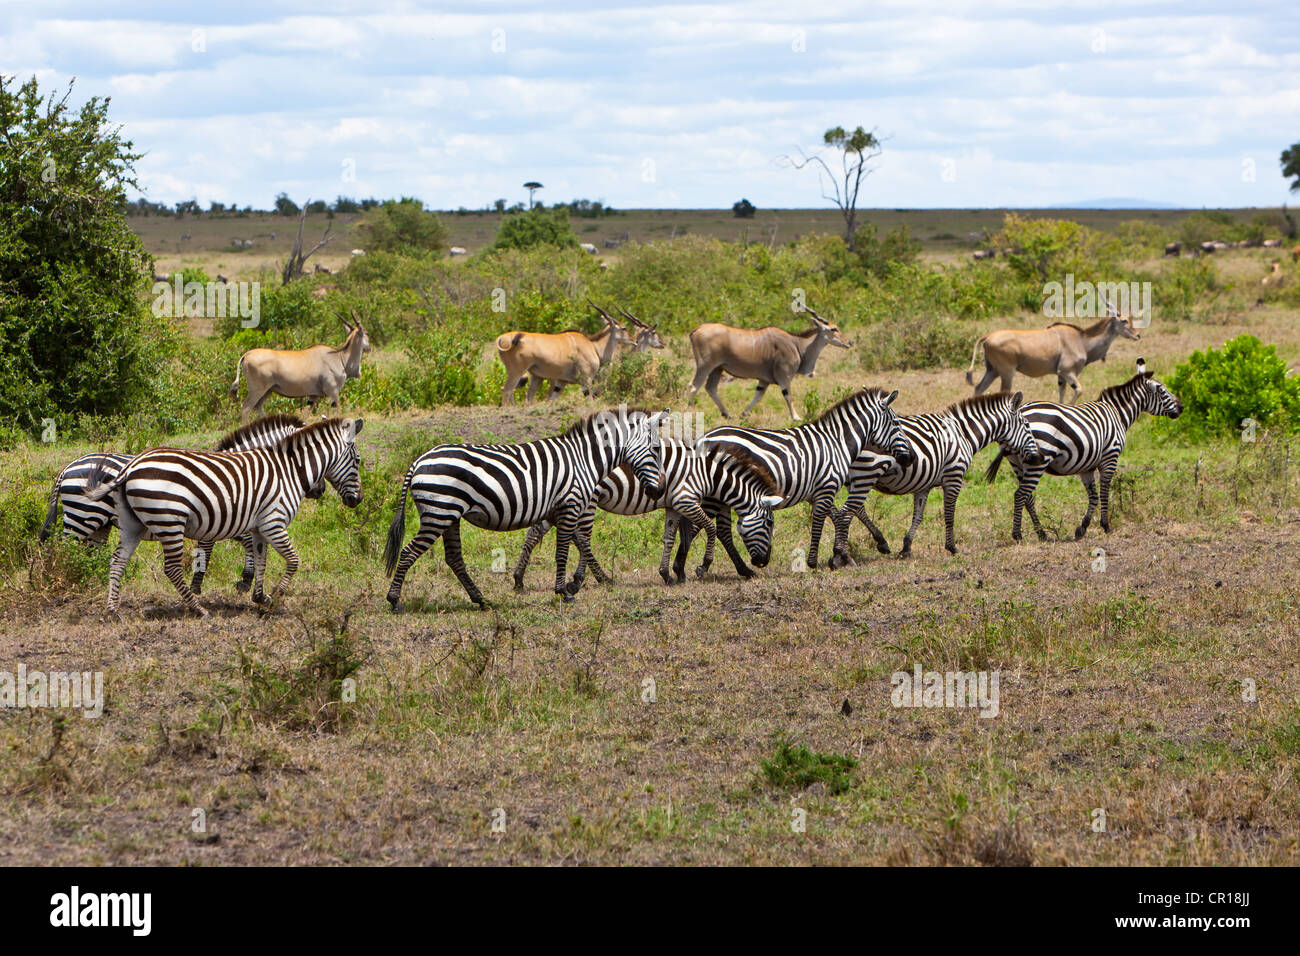 Herds of Eland Antelopes (Taurotragus oryx) and Zebras (Equus quagga), Masai Mara National Reserve, Kenya, East Africa, Africa Stock Photo